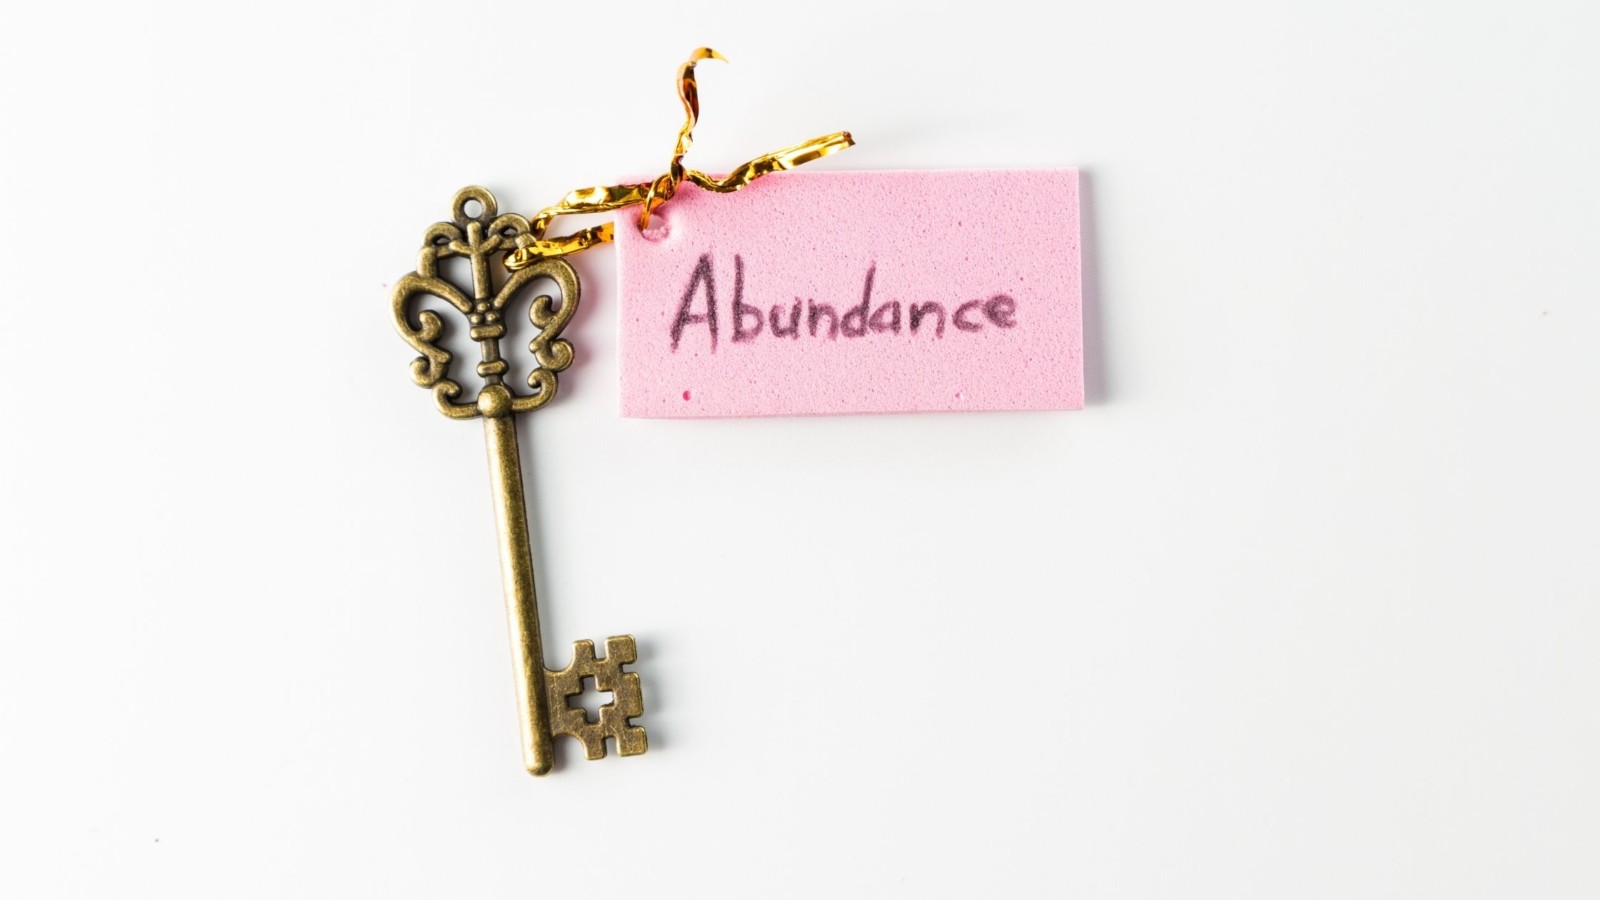 Abundance is the Key